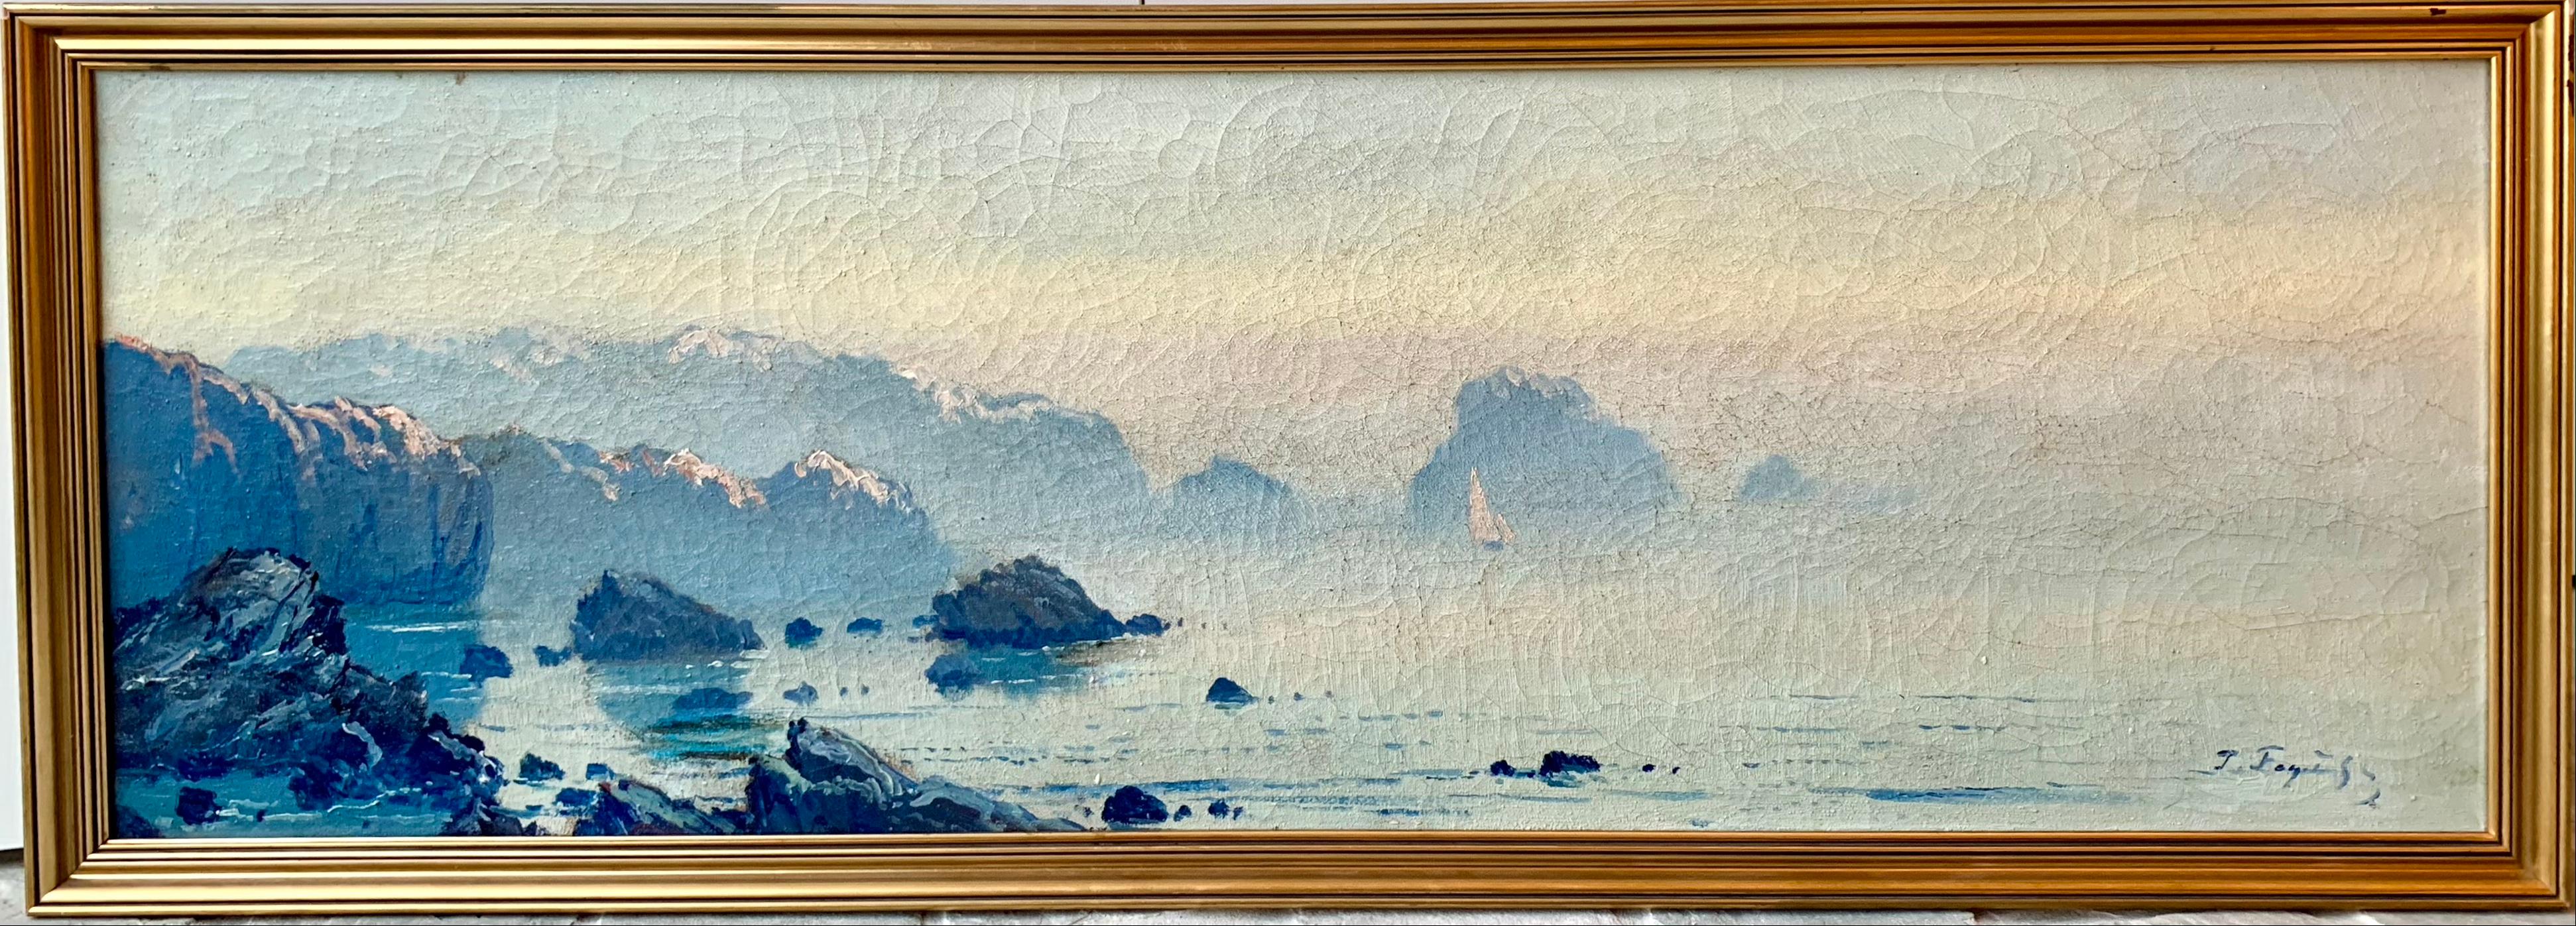 Pierre Faget-Germain Landscape Painting - Large French Impressionist Seascape - Shore Sea Mediterranean 